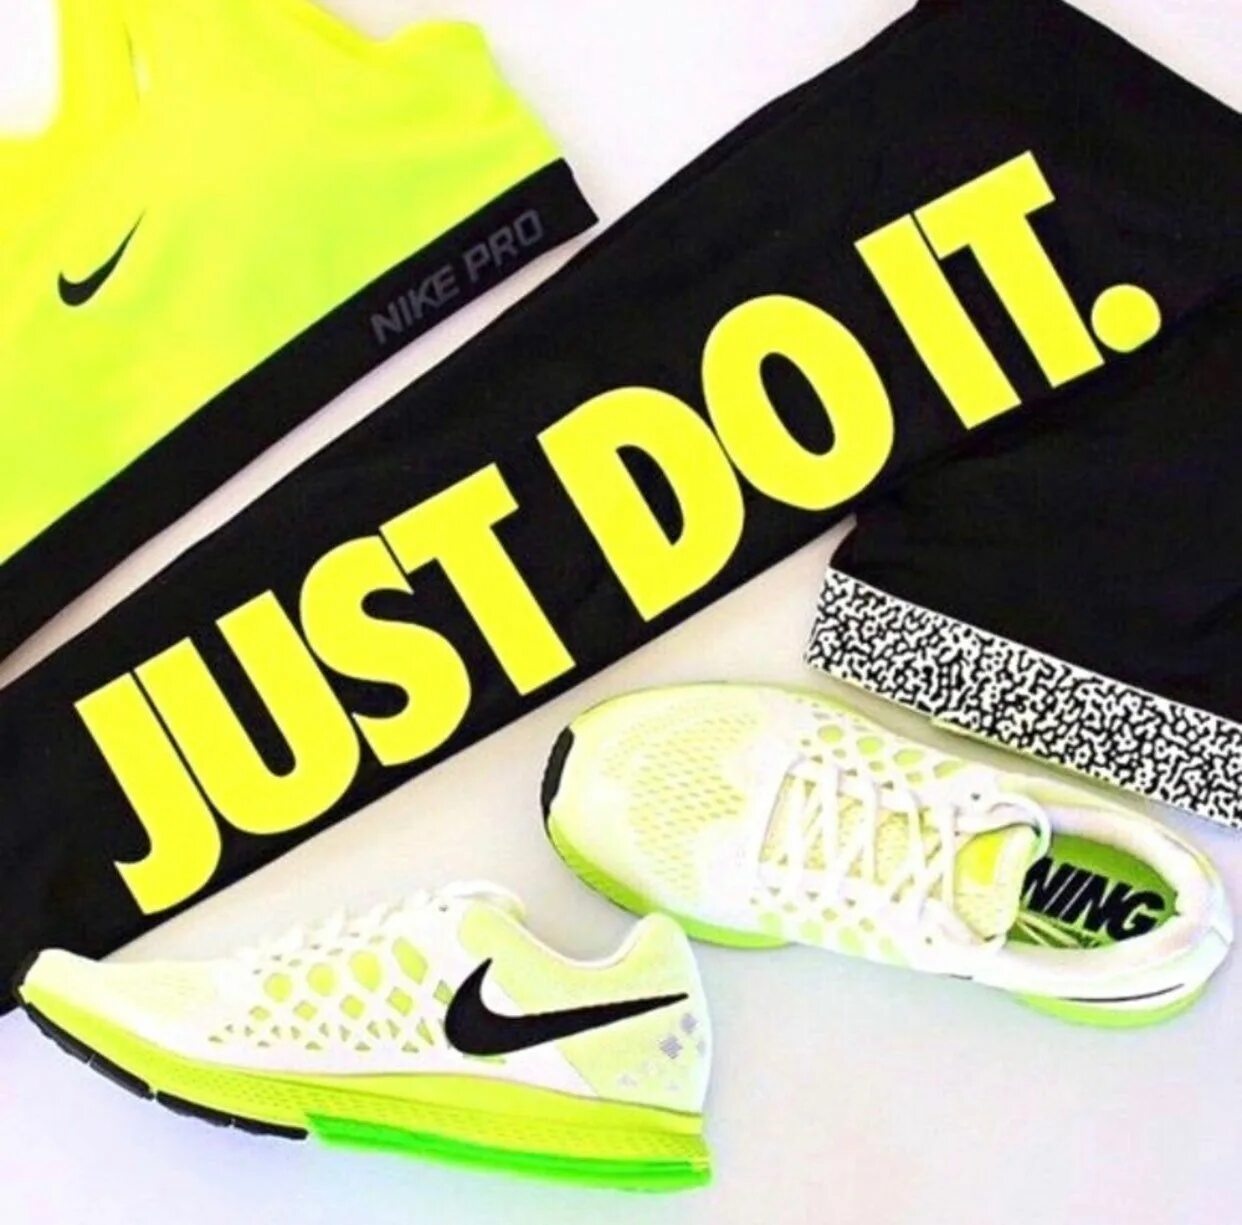 Найк just do it. Nike just do it. Nike слоган. Найк Джаст Ду ИТ кроссовки.